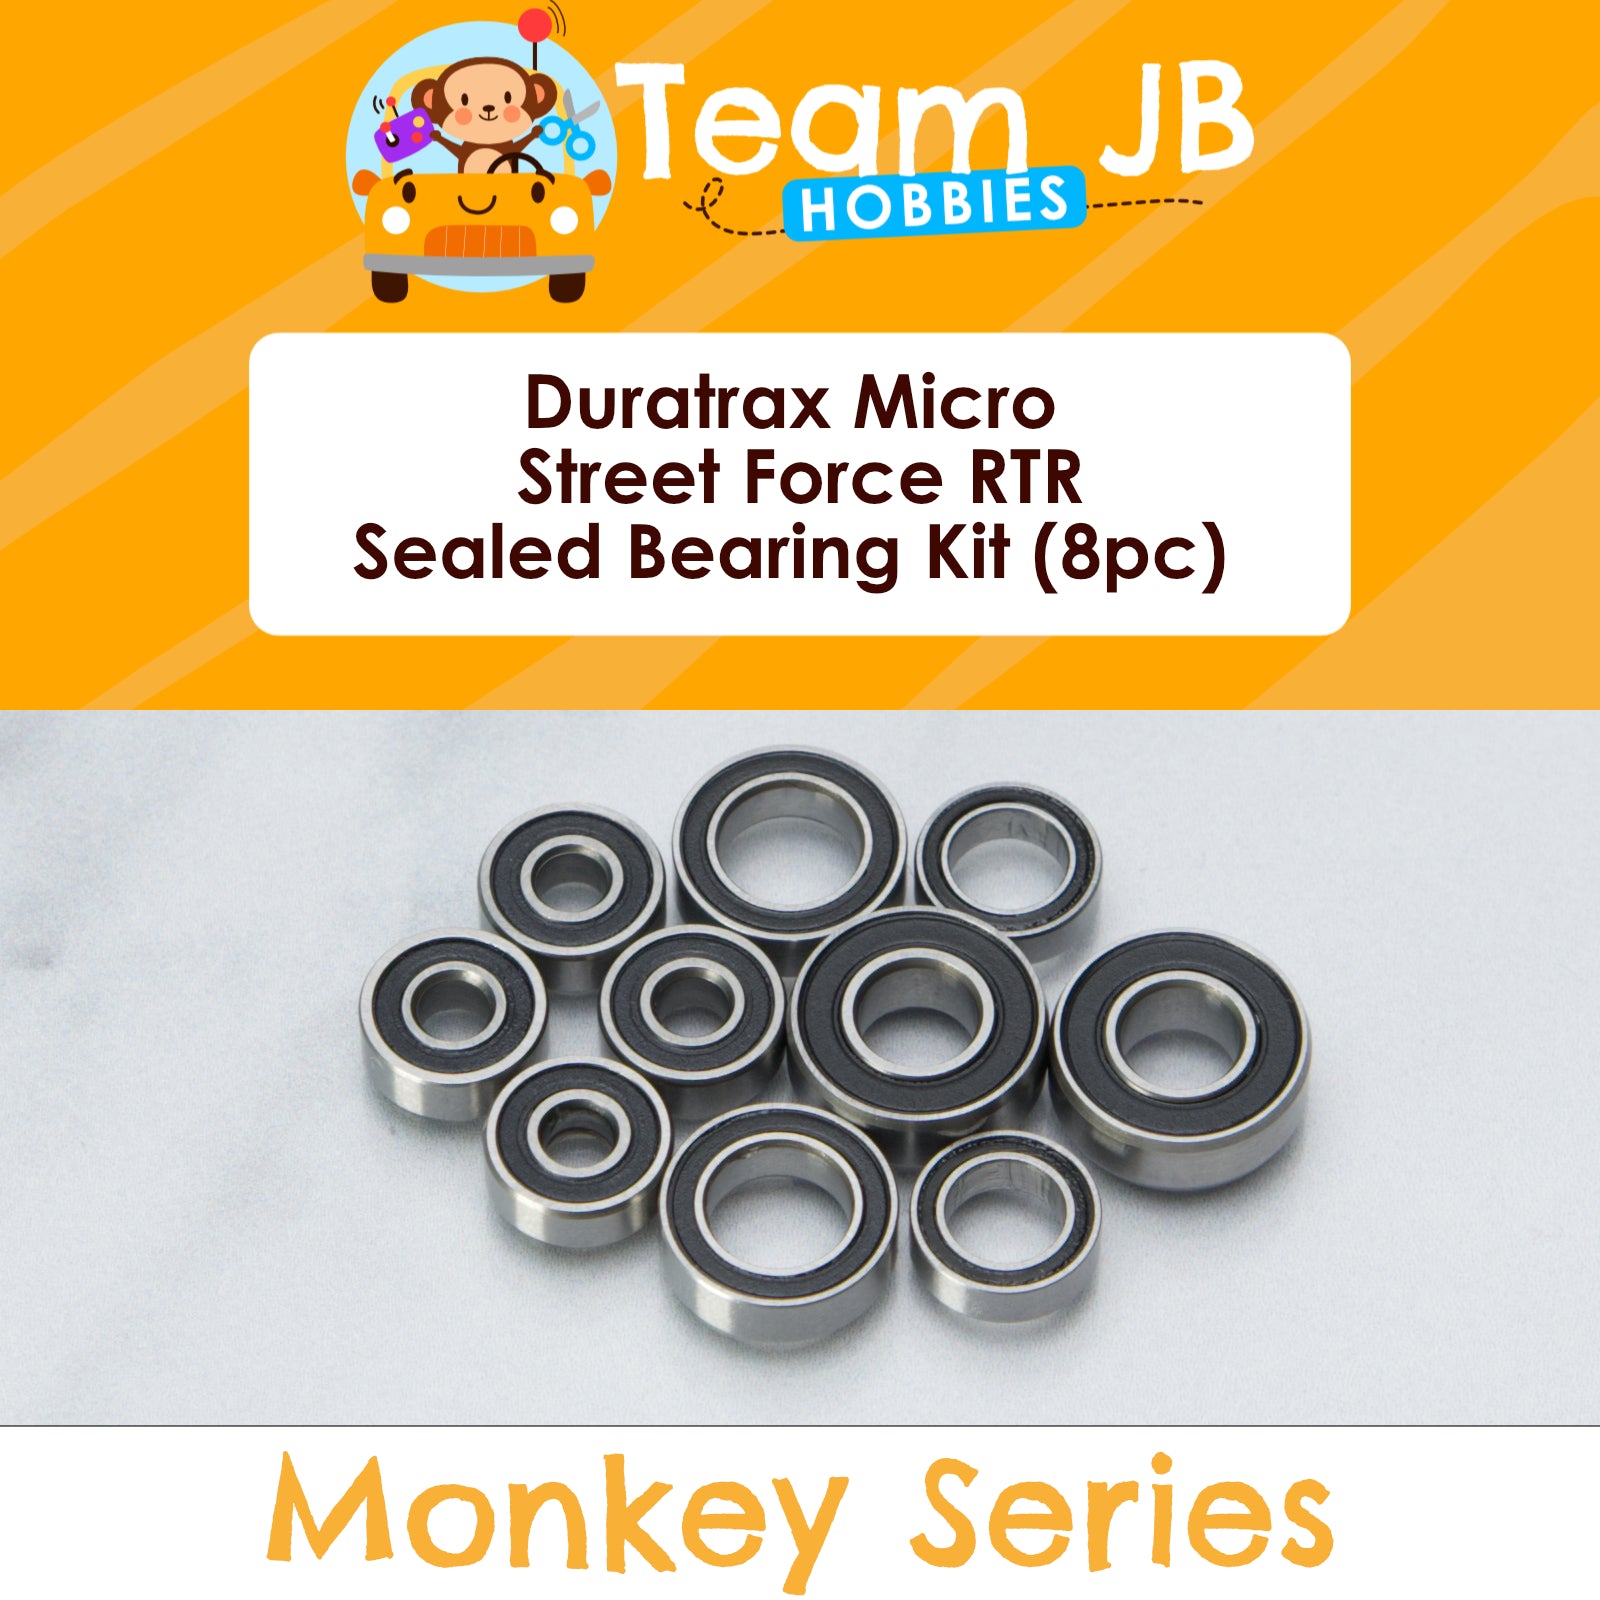 Duratrax Micro Street Force RTR - Sealed Bearing Kit